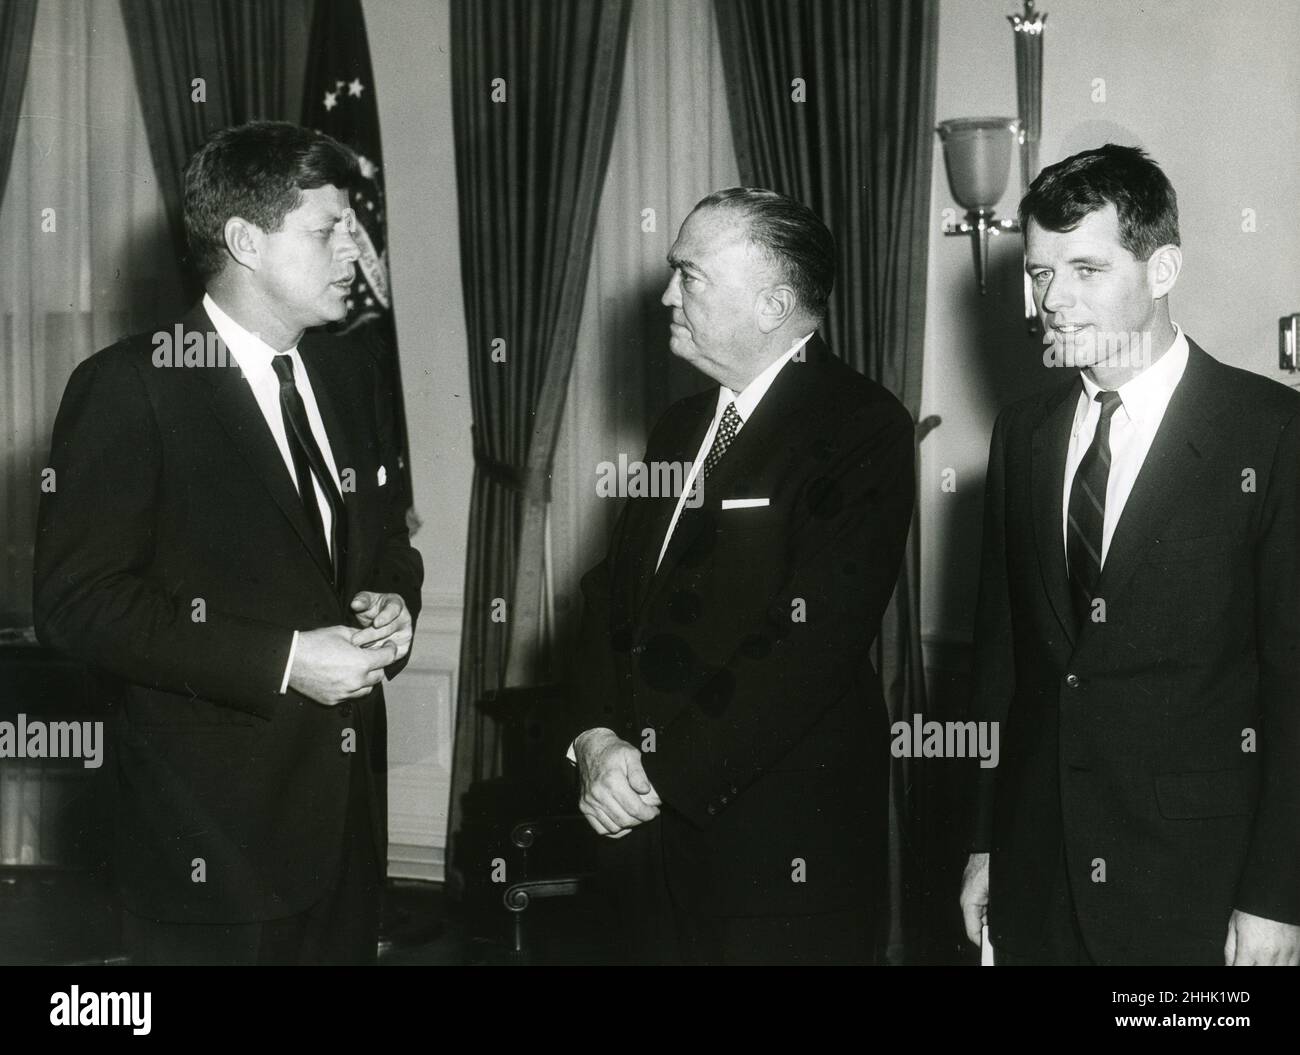 Präsident Kennedy trifft sich mit dem FBI-Direktor J. Edgar Hoover und dem Generalanwalt Robert F. Kennedy. 23. Februar 1961. Abbie Rowe Fotografin. Stockfoto